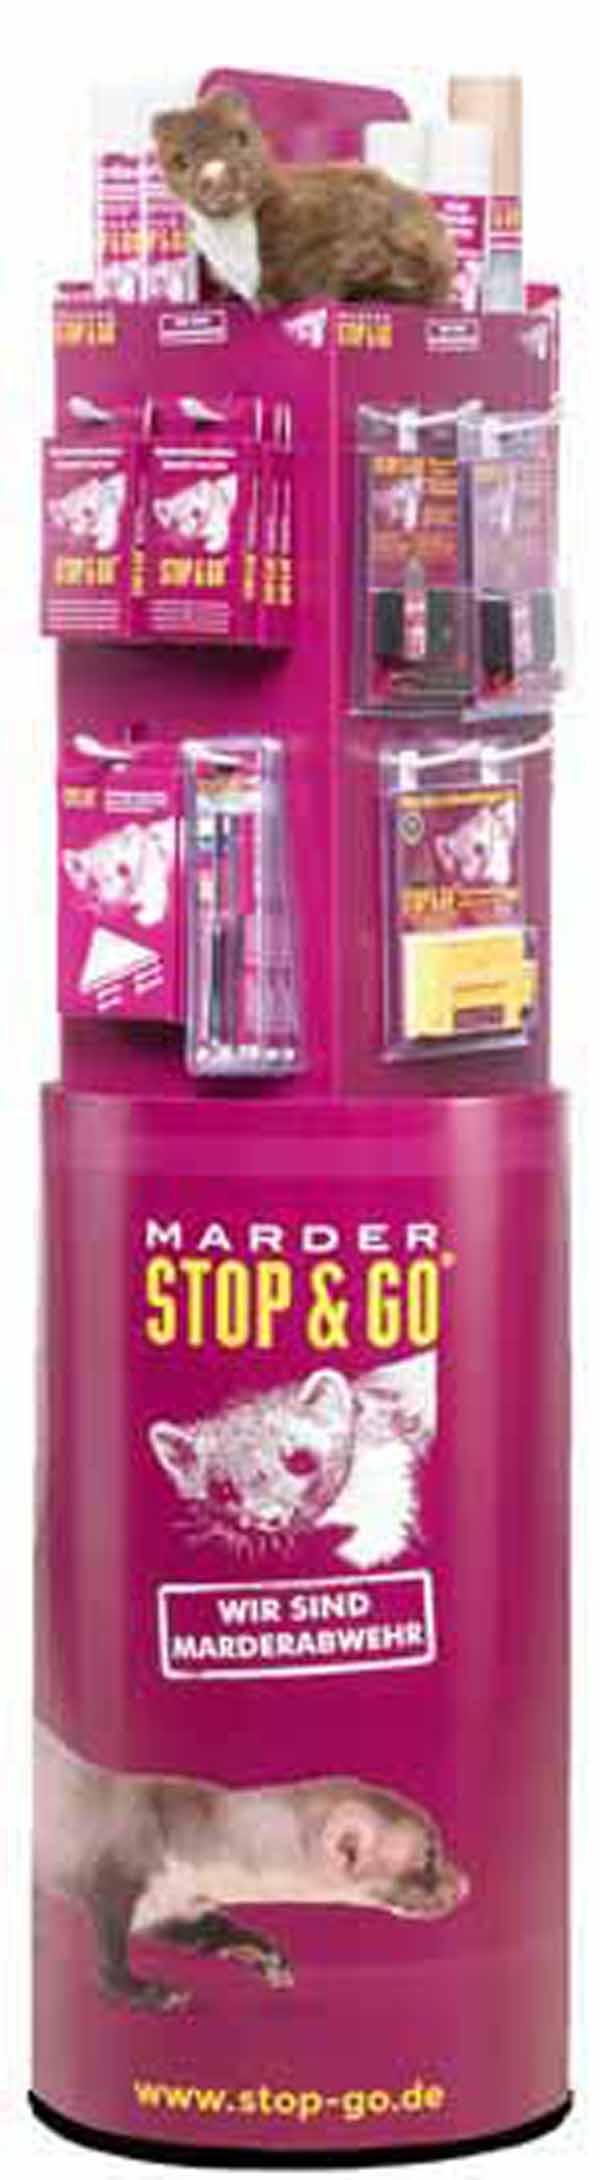 Stop & Go Ultraschall Marder-Abwehrgerät (07533) online kaufen